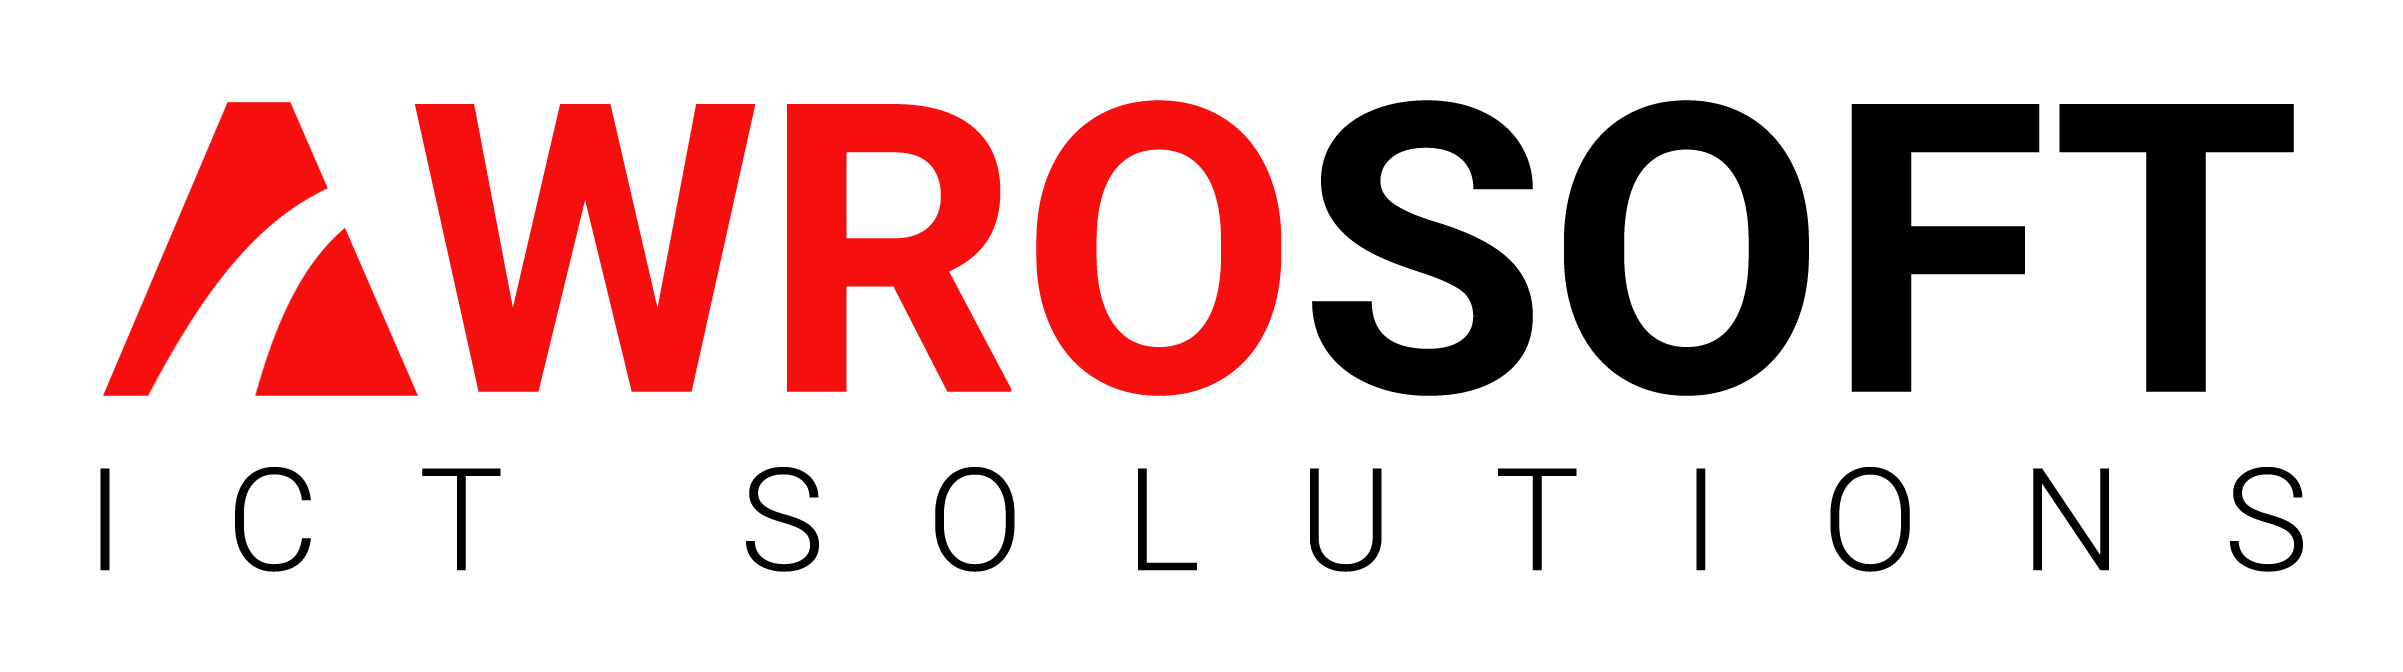 Awrosoft logo